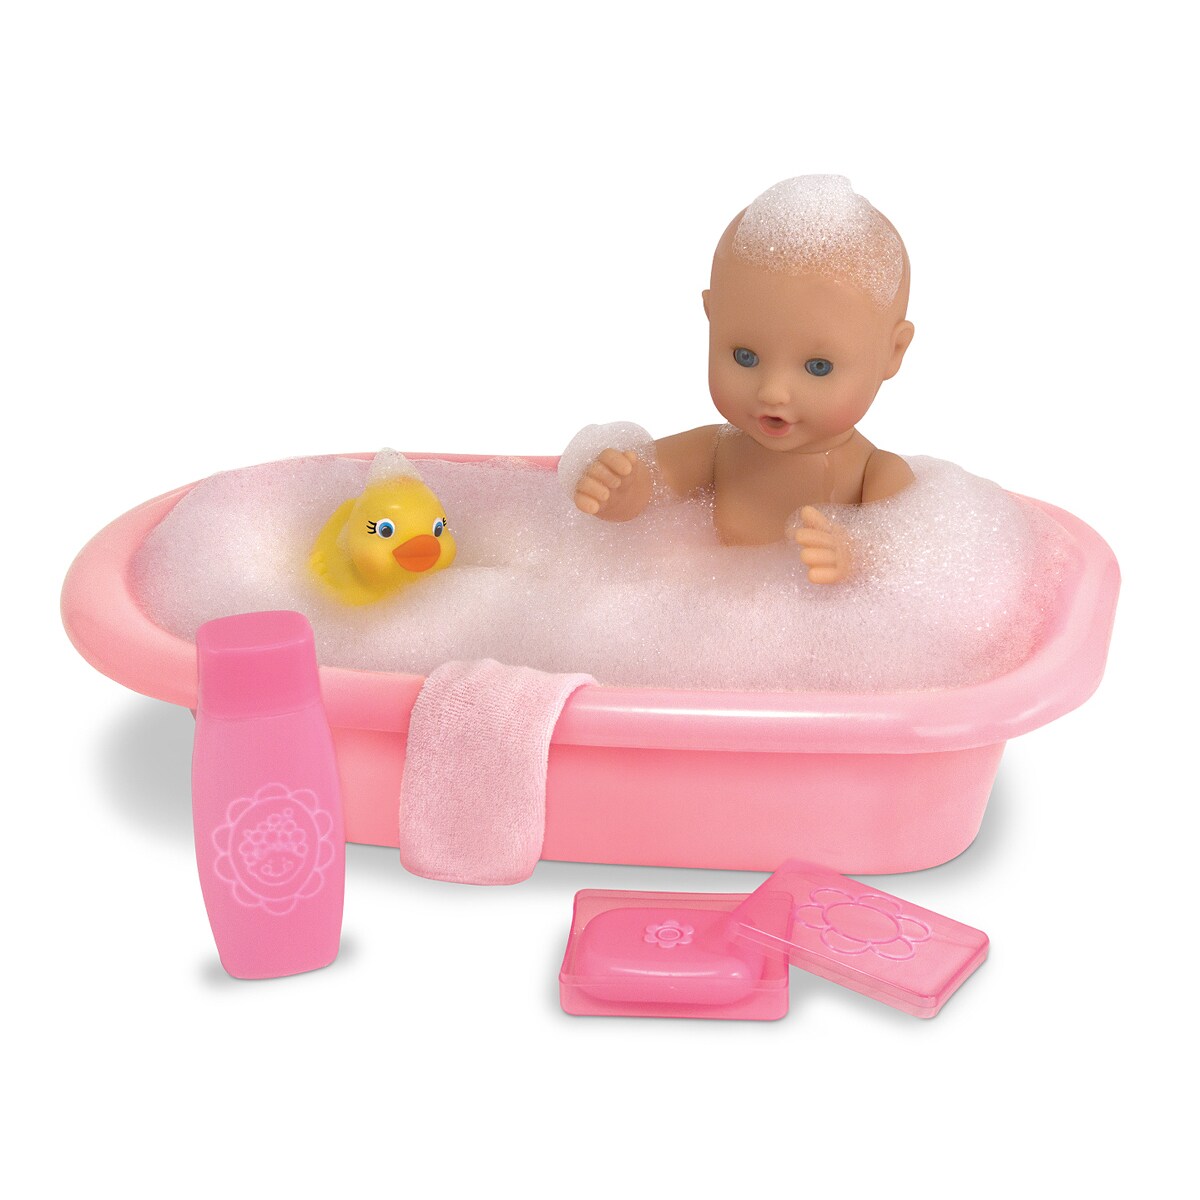 baby doll and bath